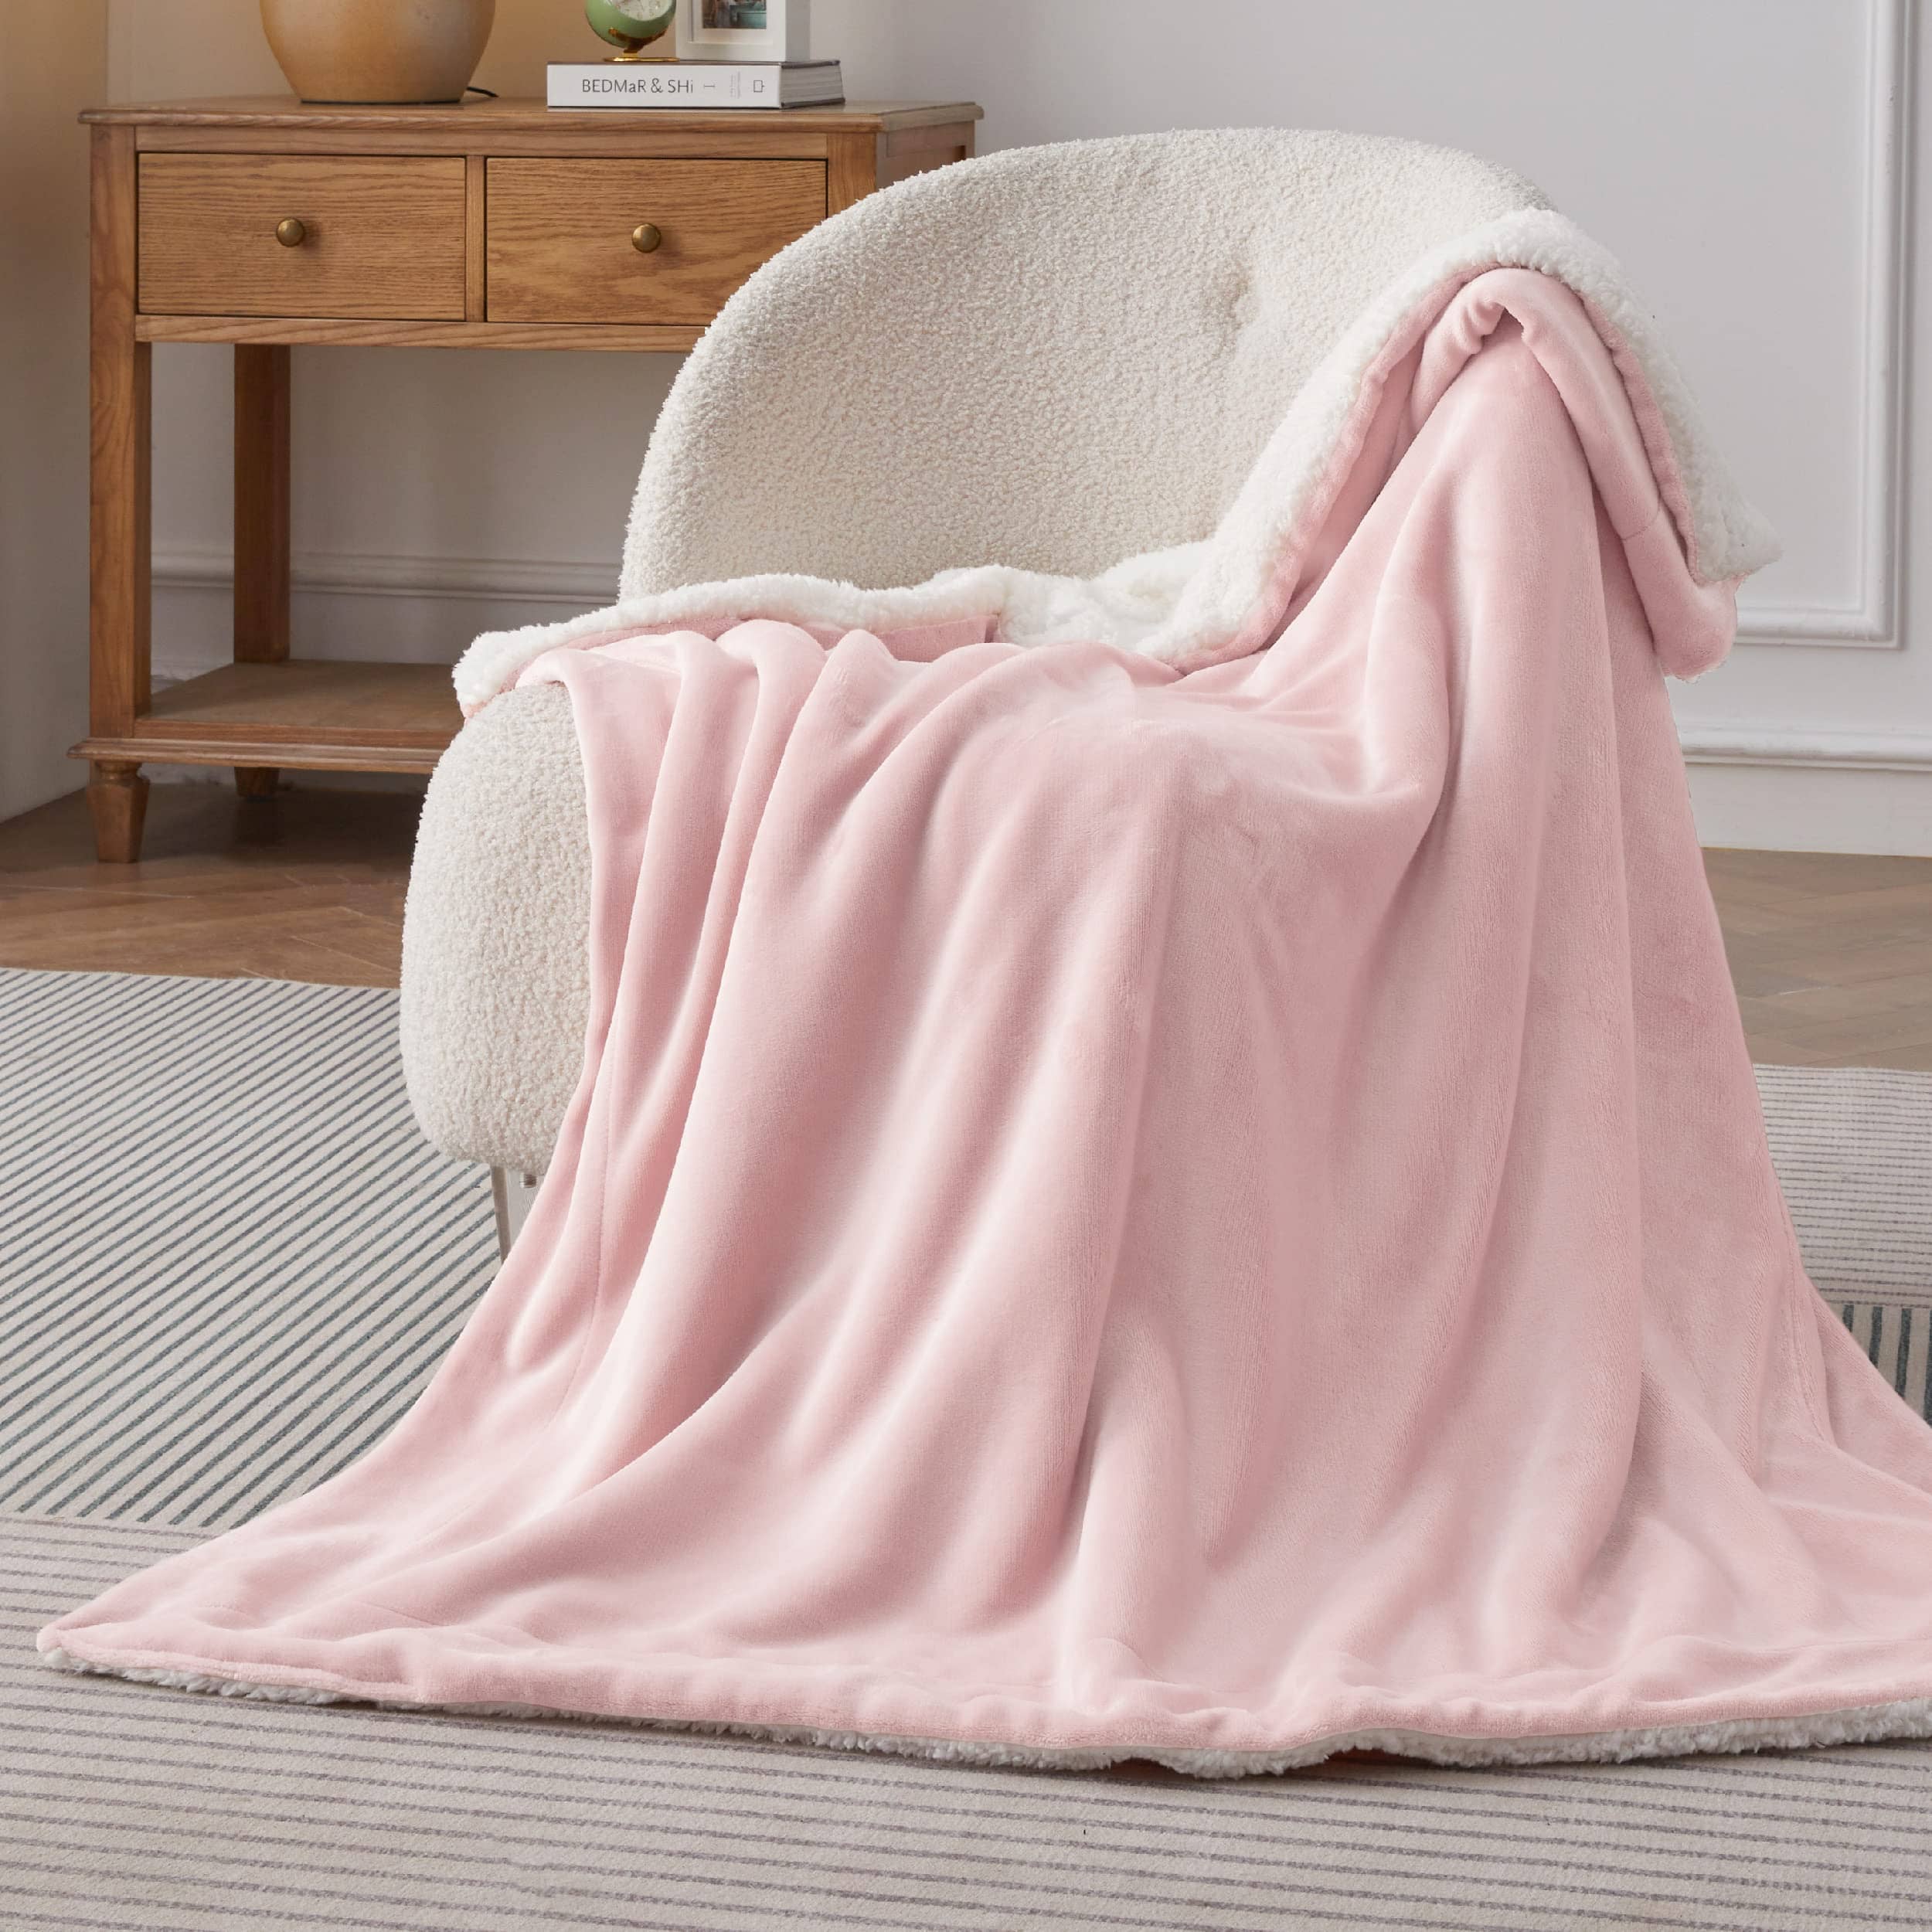 Bedsure Fleece Blanket Throw Blanket - Light Grey Lightweight Blankets for  Sofa, Couch, Bed, Camping, Travel - Super Soft Cozy Microfiber Blanket